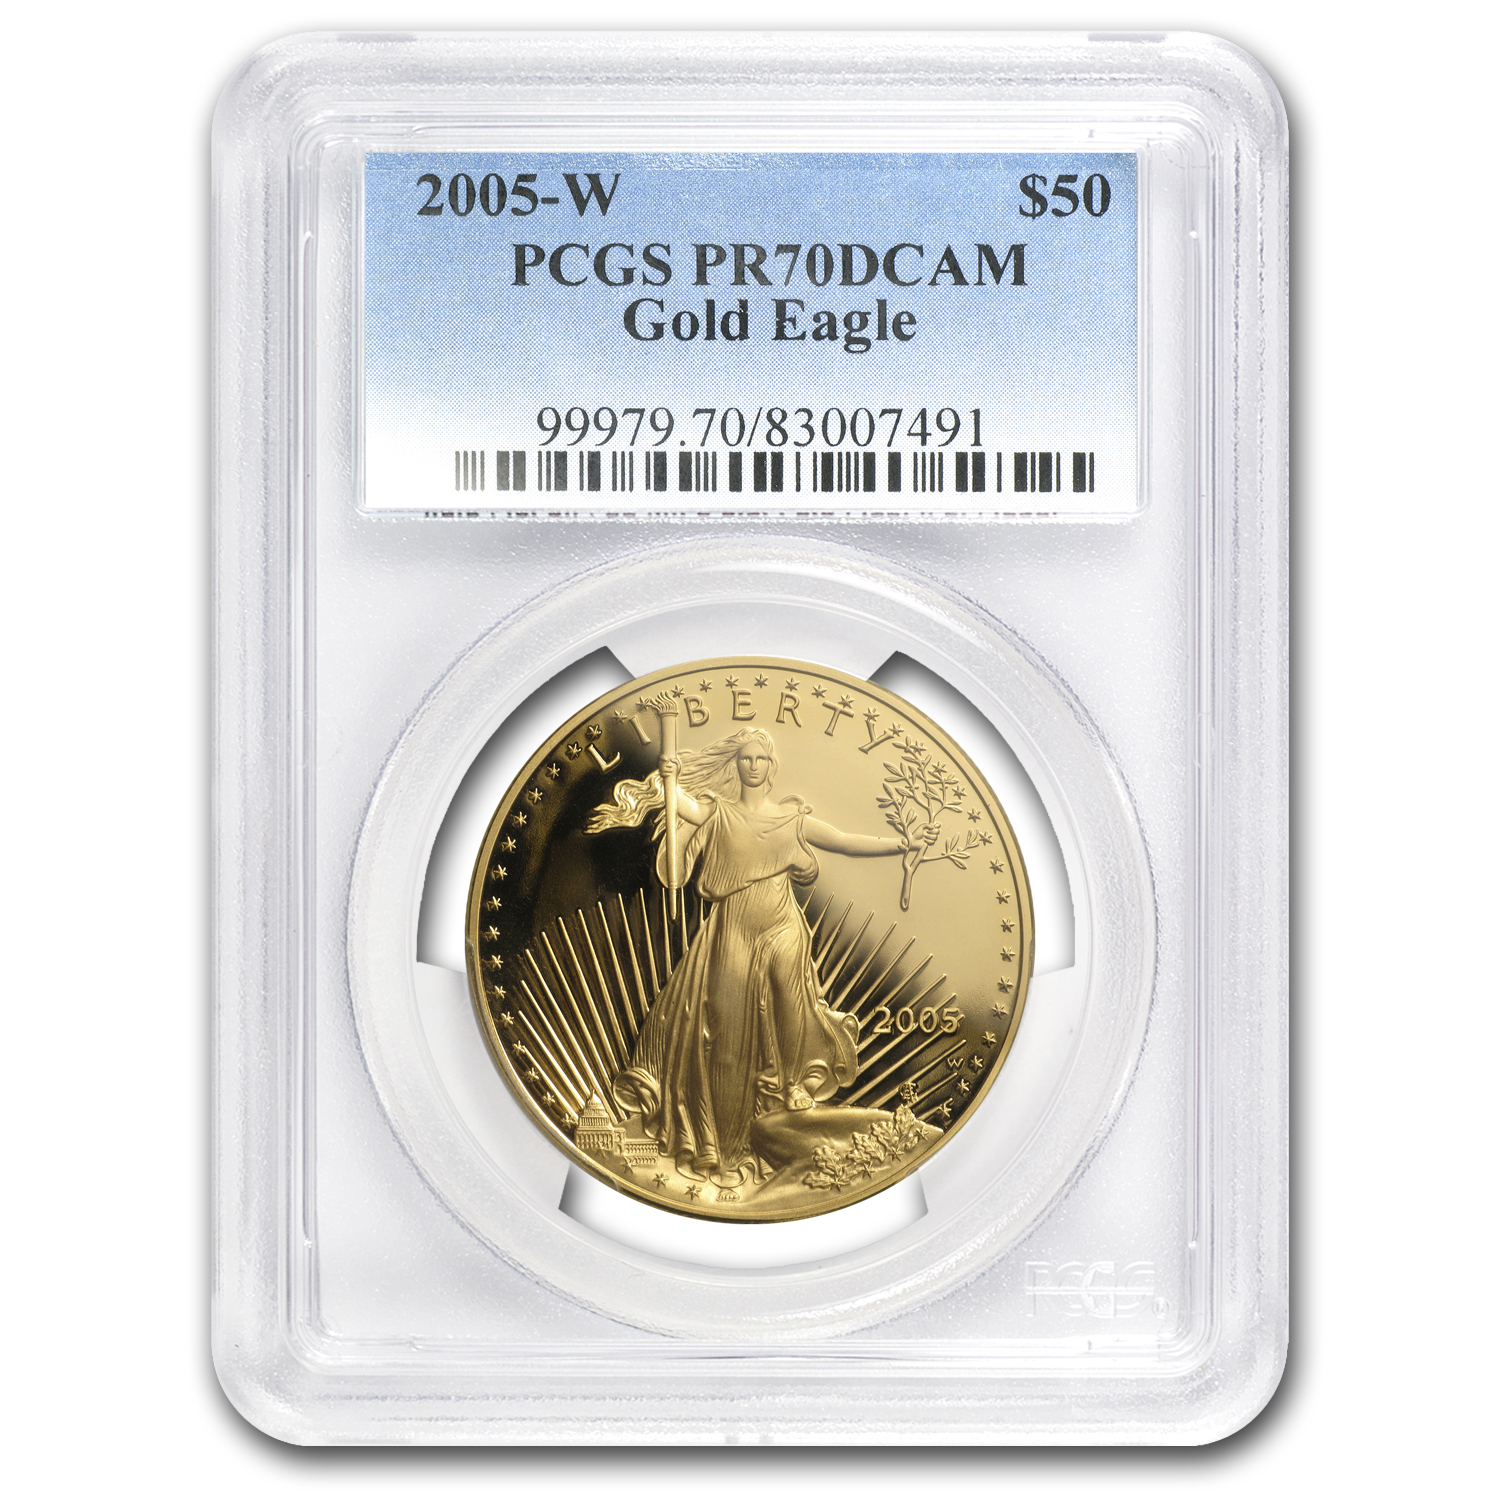 Buy 2005-W 1 oz Proof American Gold Eagle PR-70 PCGS